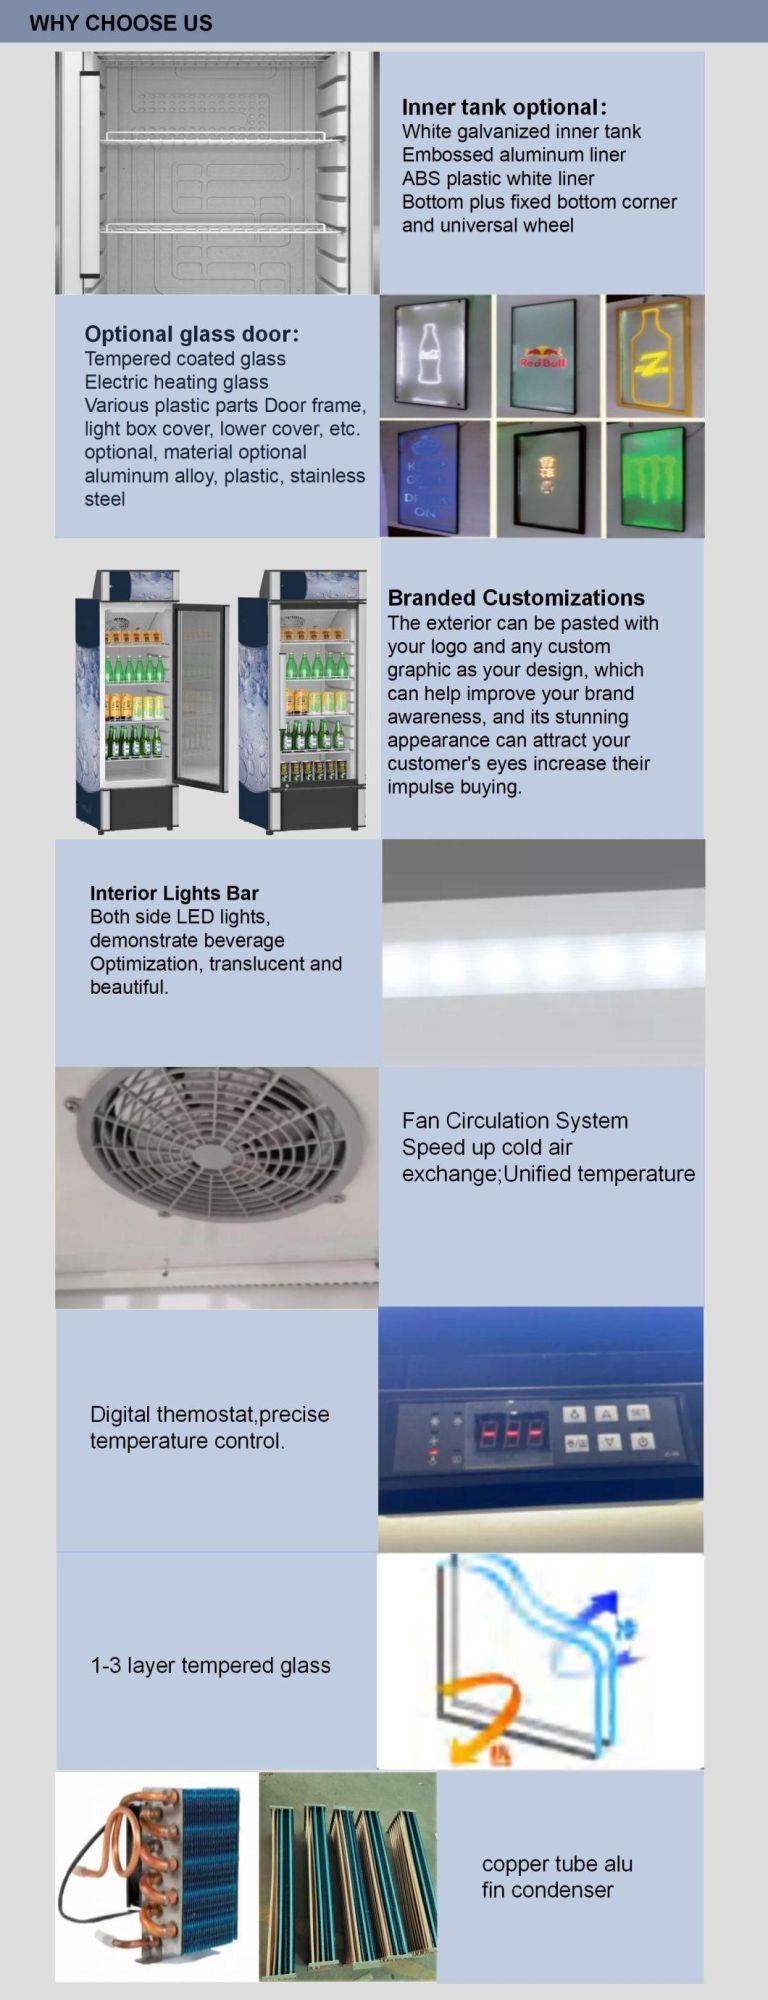 CE Lrestaurant Transparent Storage Cabinet Fan Cooling Display Showcase Hsc-250f